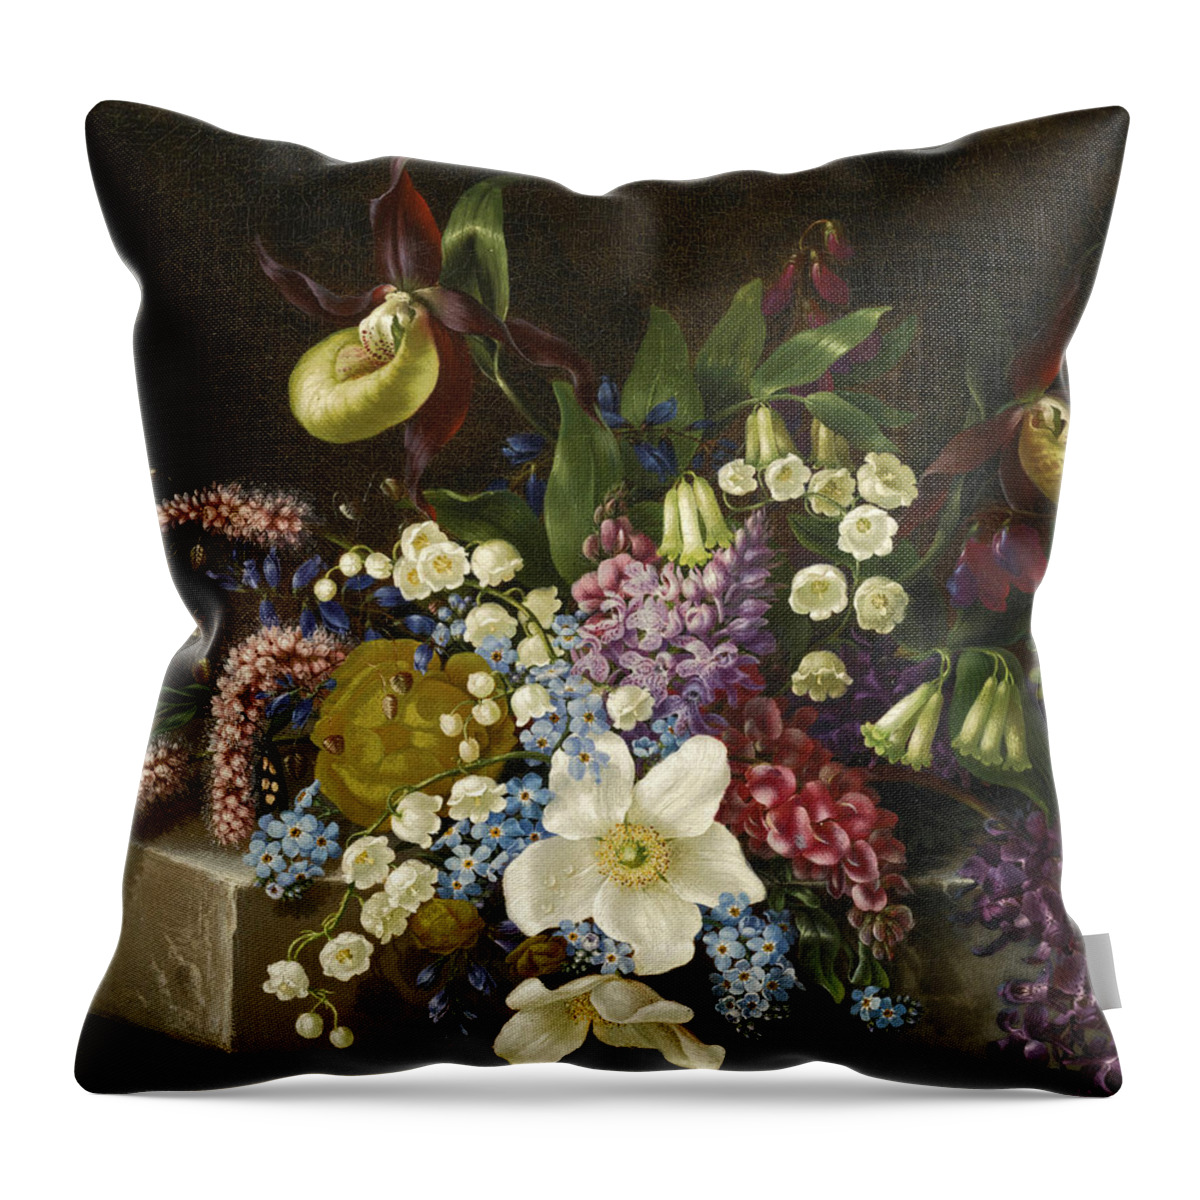 Adelheid Dietrich Throw Pillow featuring the painting Floral Still Life by Adelheid Dietrich